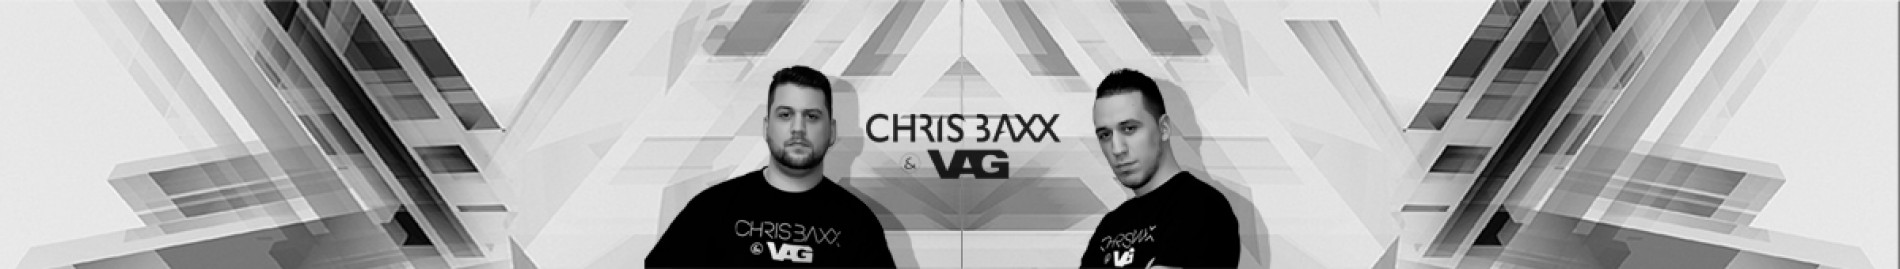 Chris Baxx & VAG